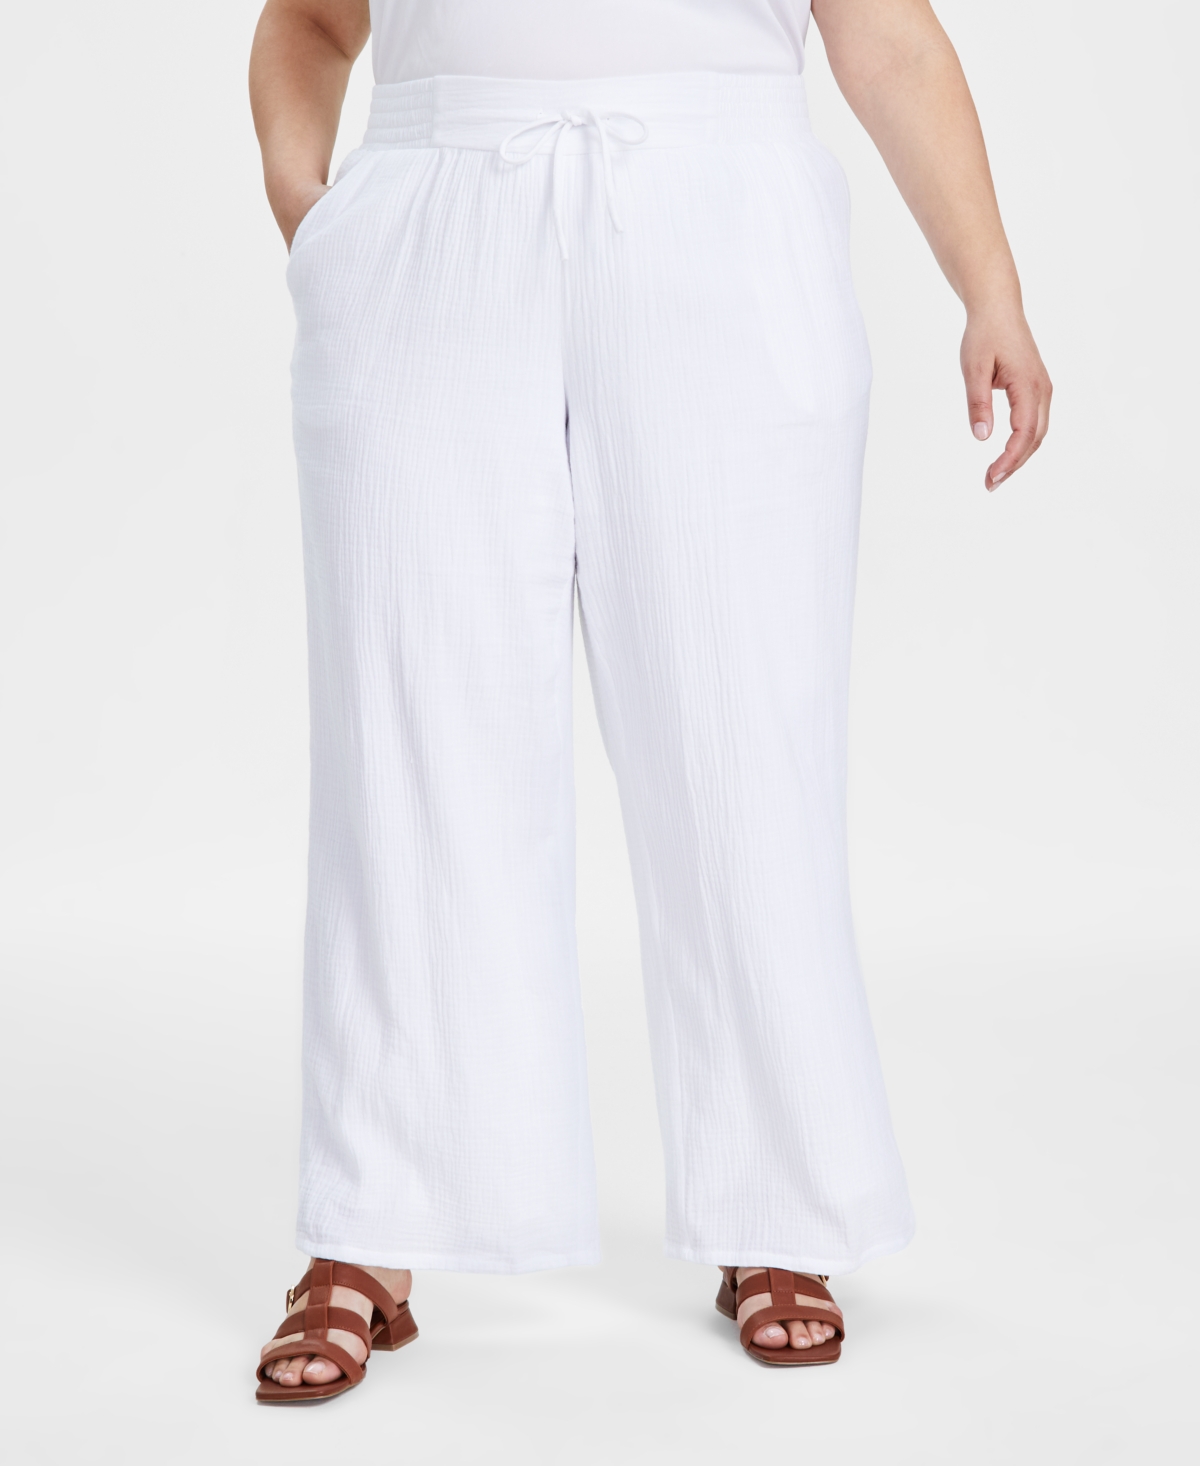 Plus Size Gauze Drawstring Pants, Created for Macy's - Bright White